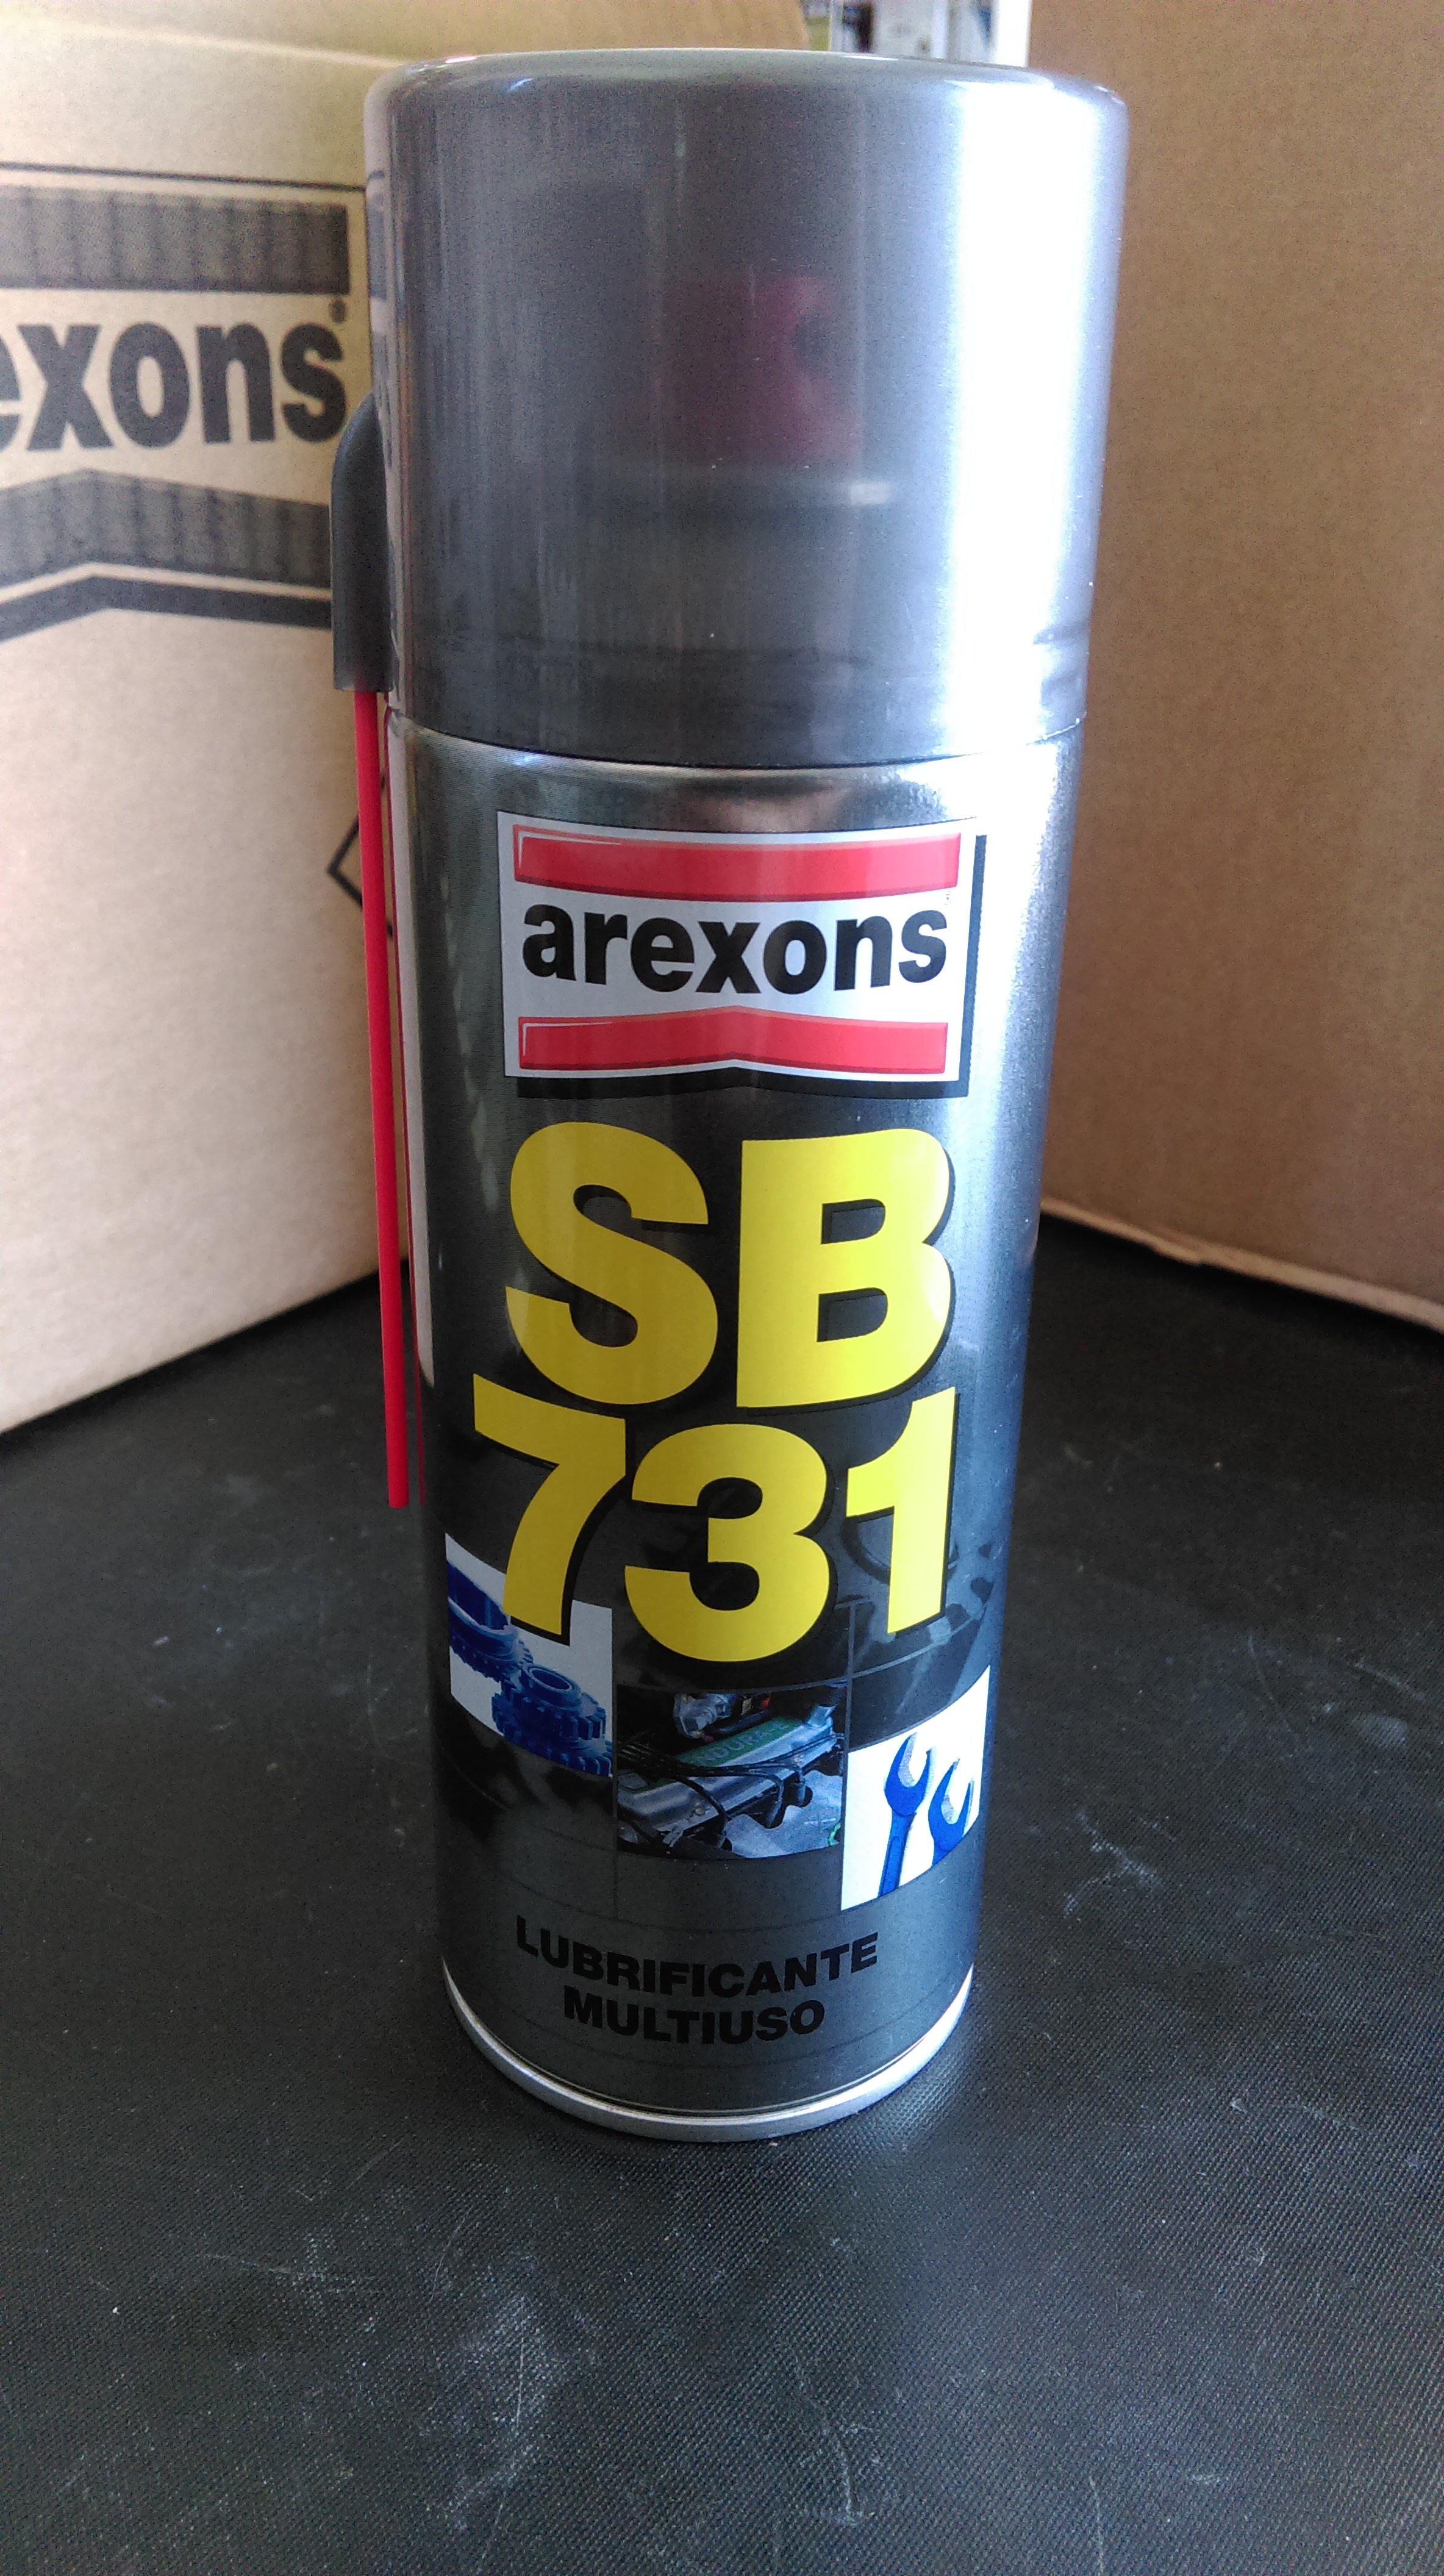 Lubrificante Arexons Professionale 4178 SB-731